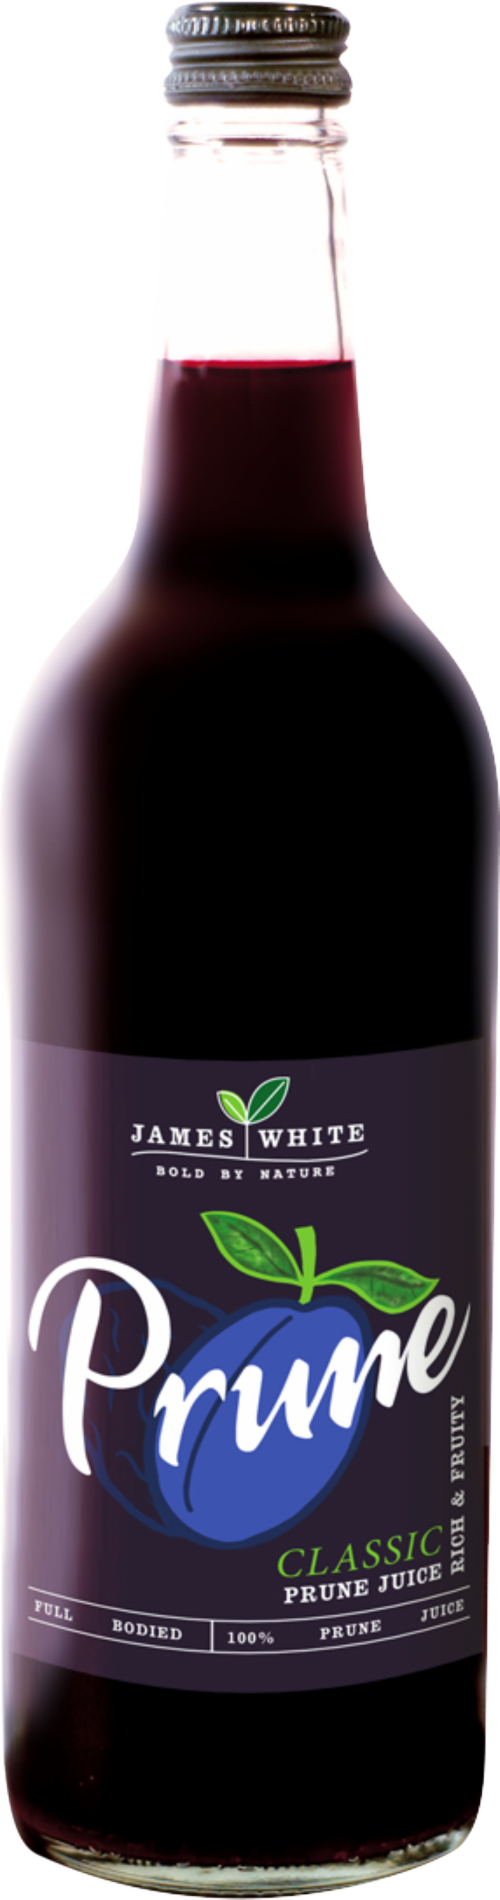 JAMES WHITE Classic Prune Juice 75cl